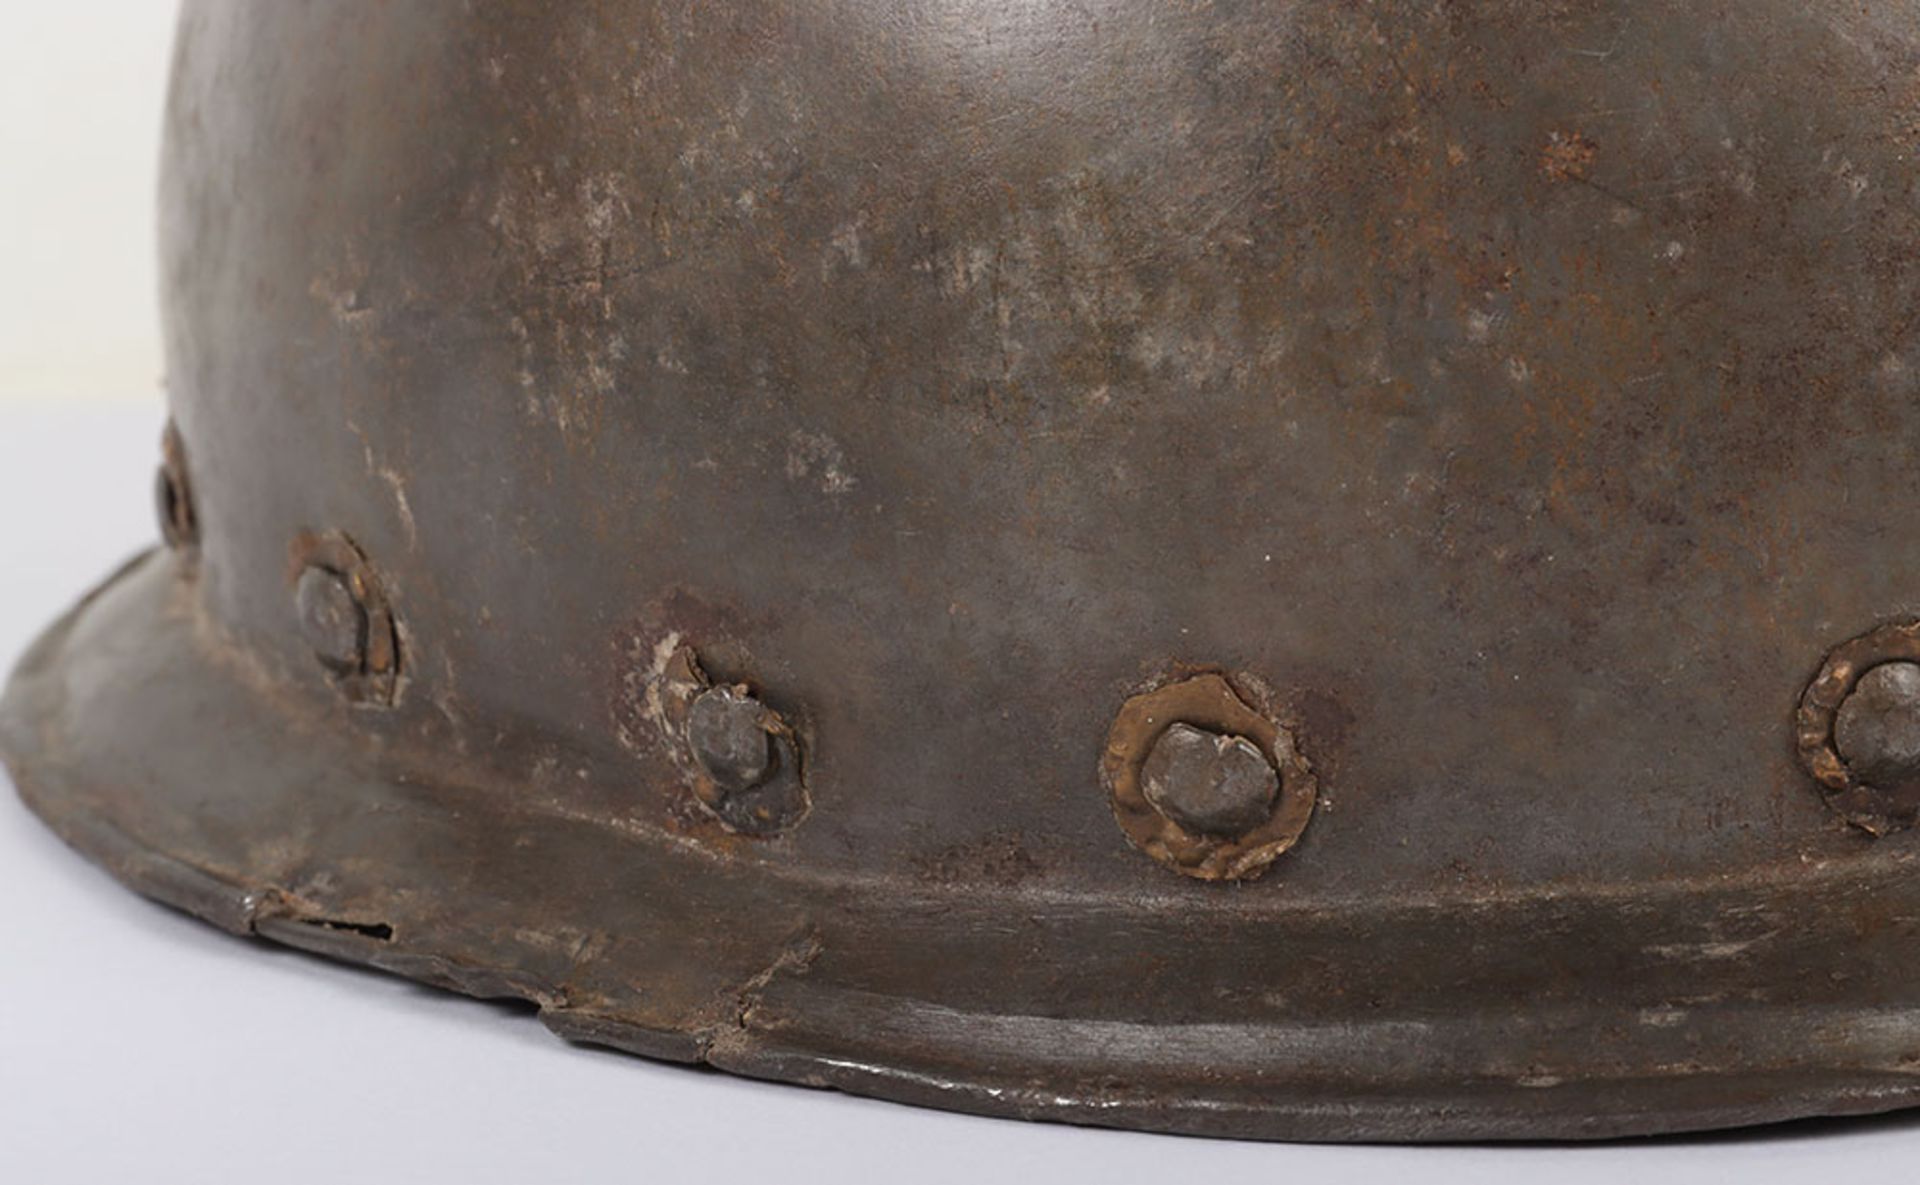 Late 16th Century Italian Helmet Cabaset - Image 8 of 11